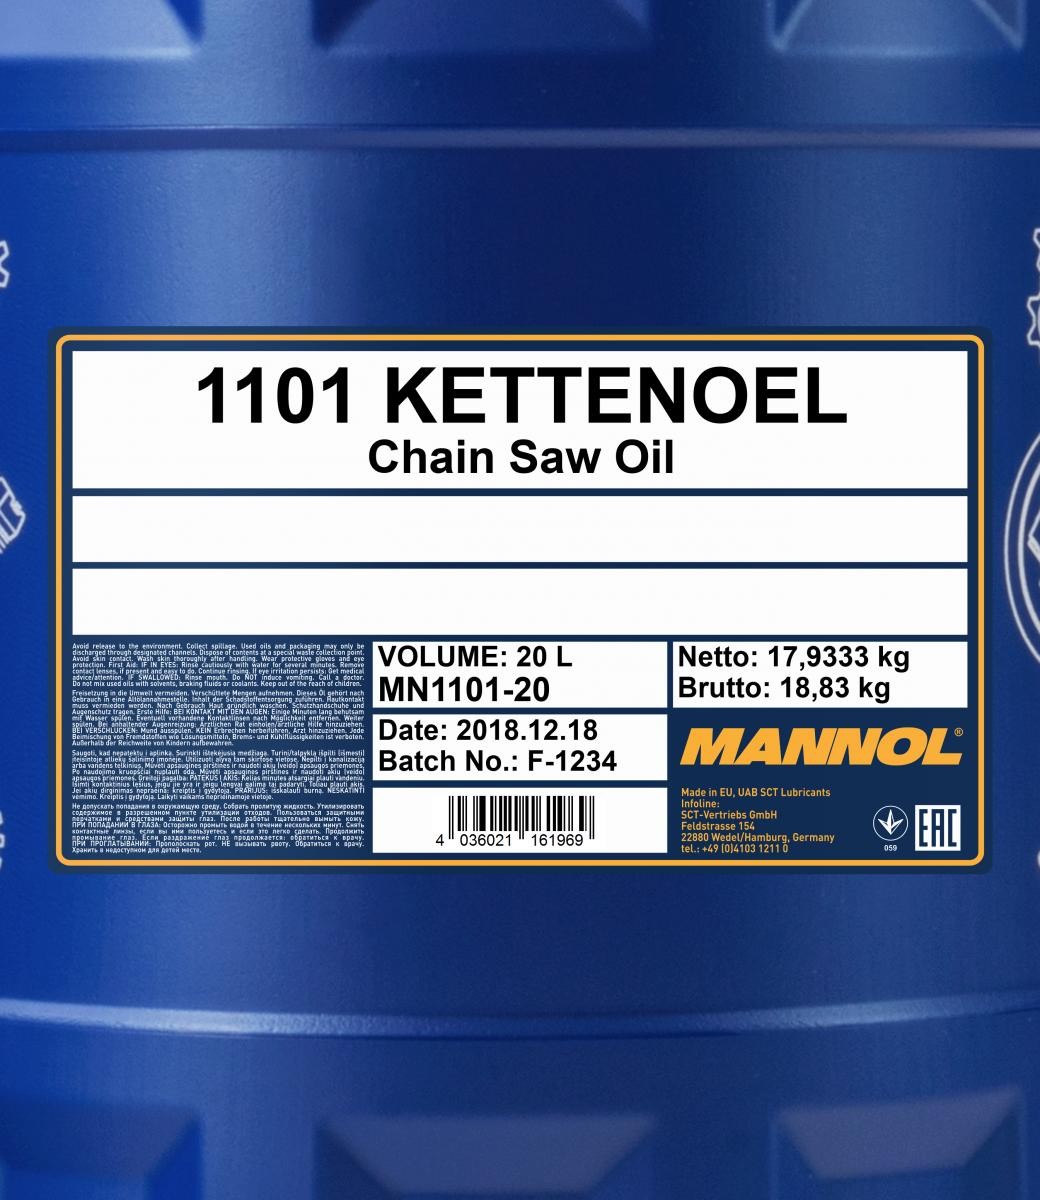 Mannol 1101 Kettenöl Sägekettenöl 20 Liter